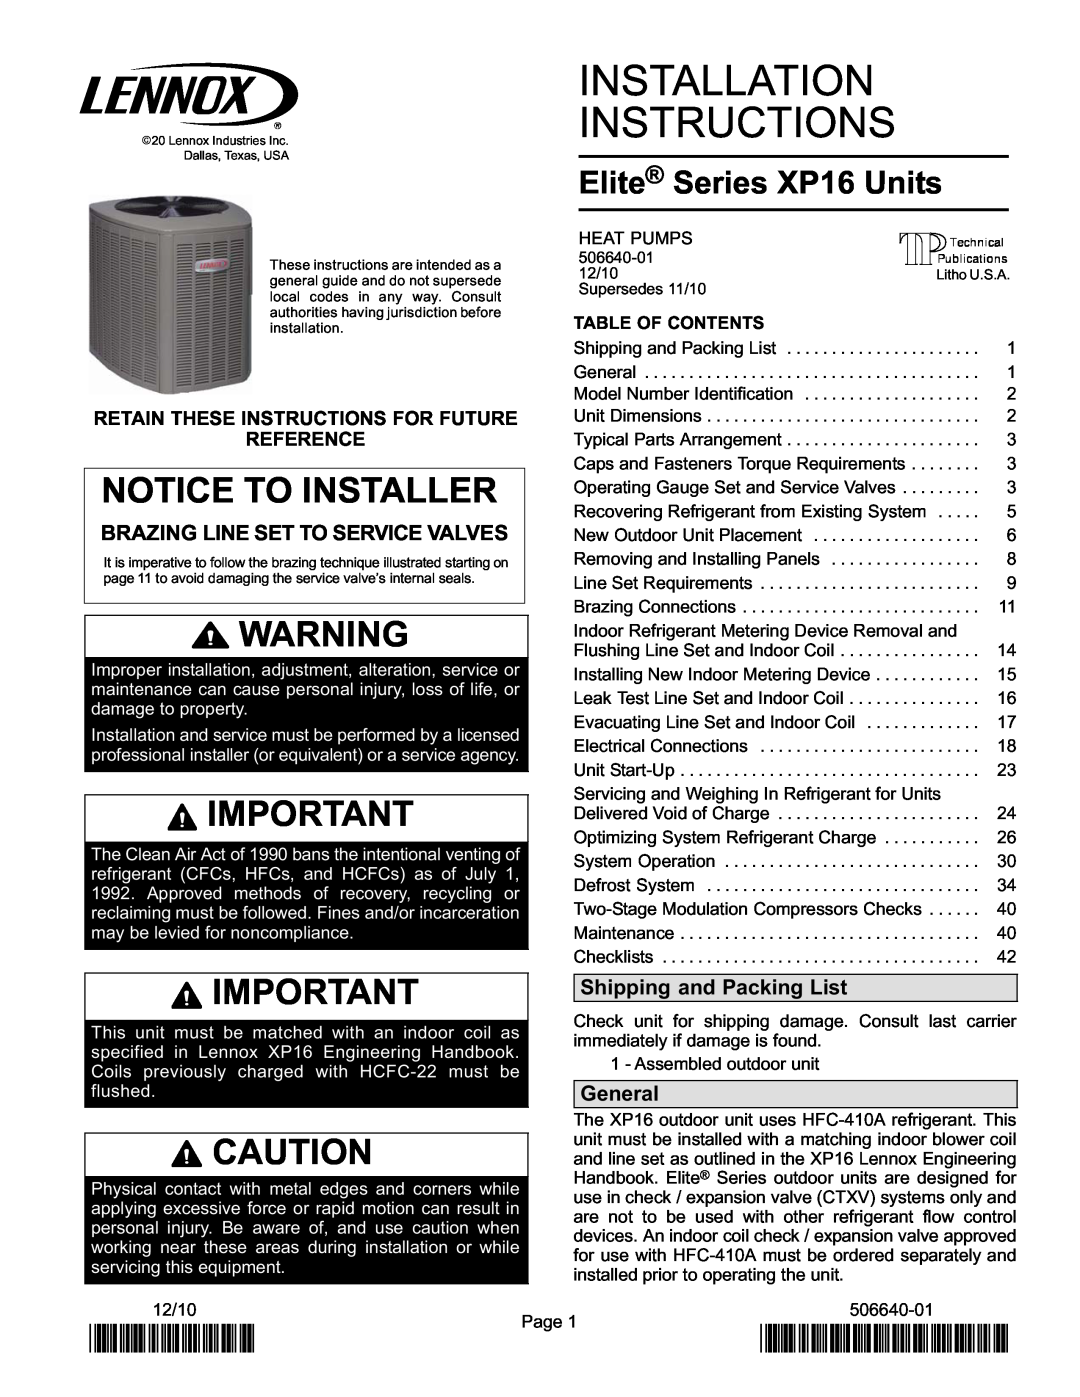 Lenox Elite Series XP16 Units Heat Pumps installation instructions Notice To Installer, 2P1210, P506640-01, General 